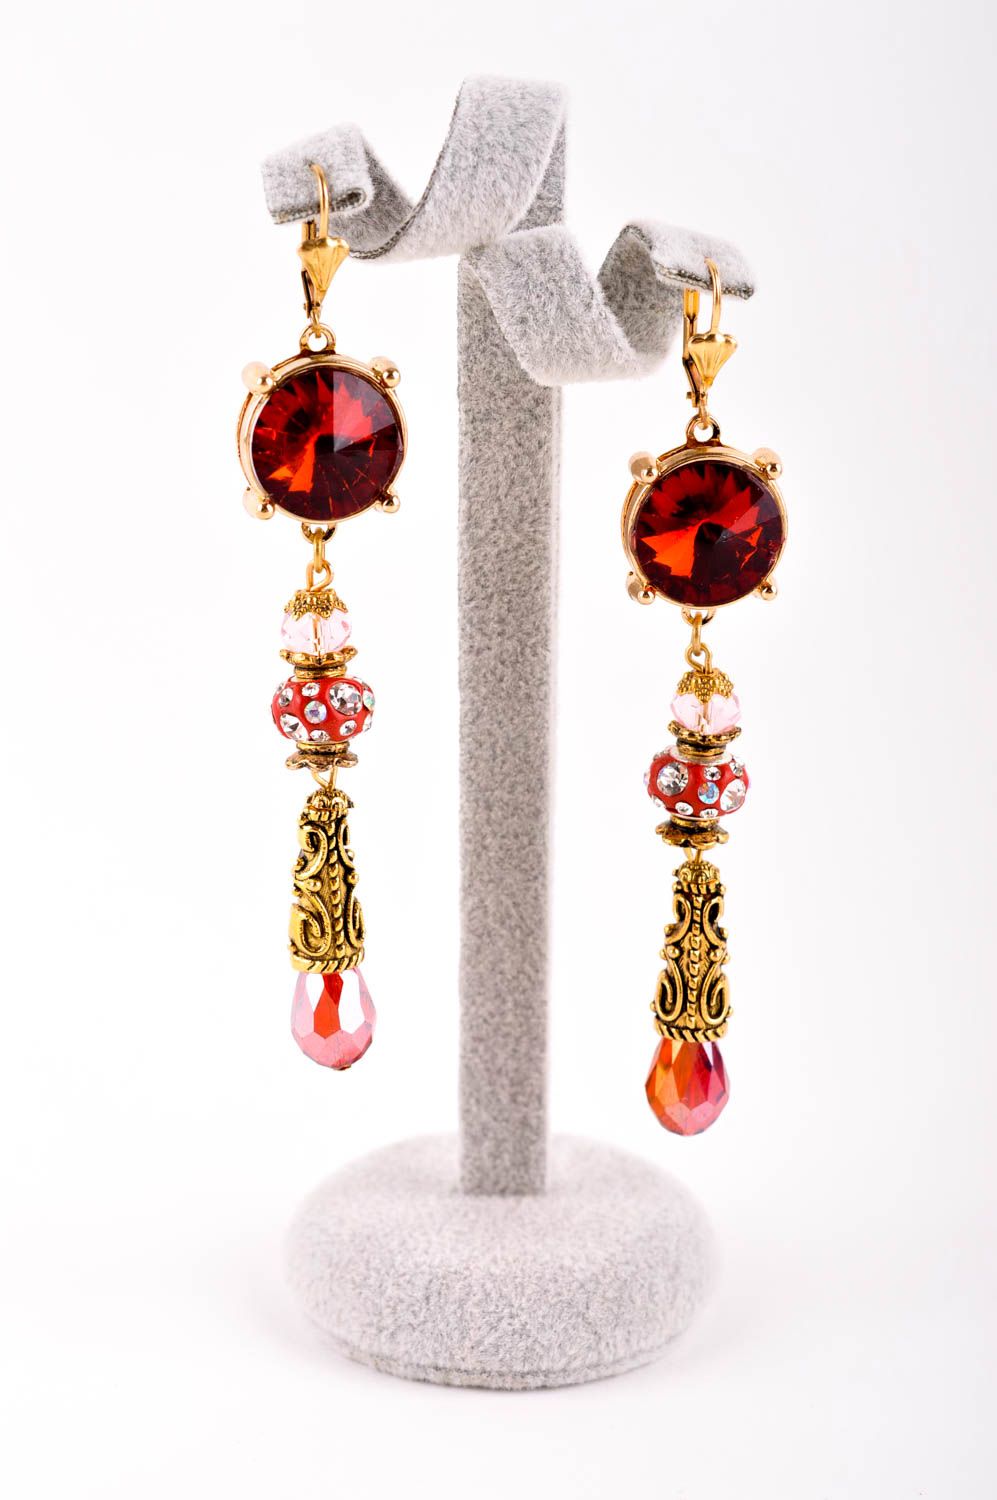 Handmade earrings designer earrings with charms unusual gift for girls photo 2